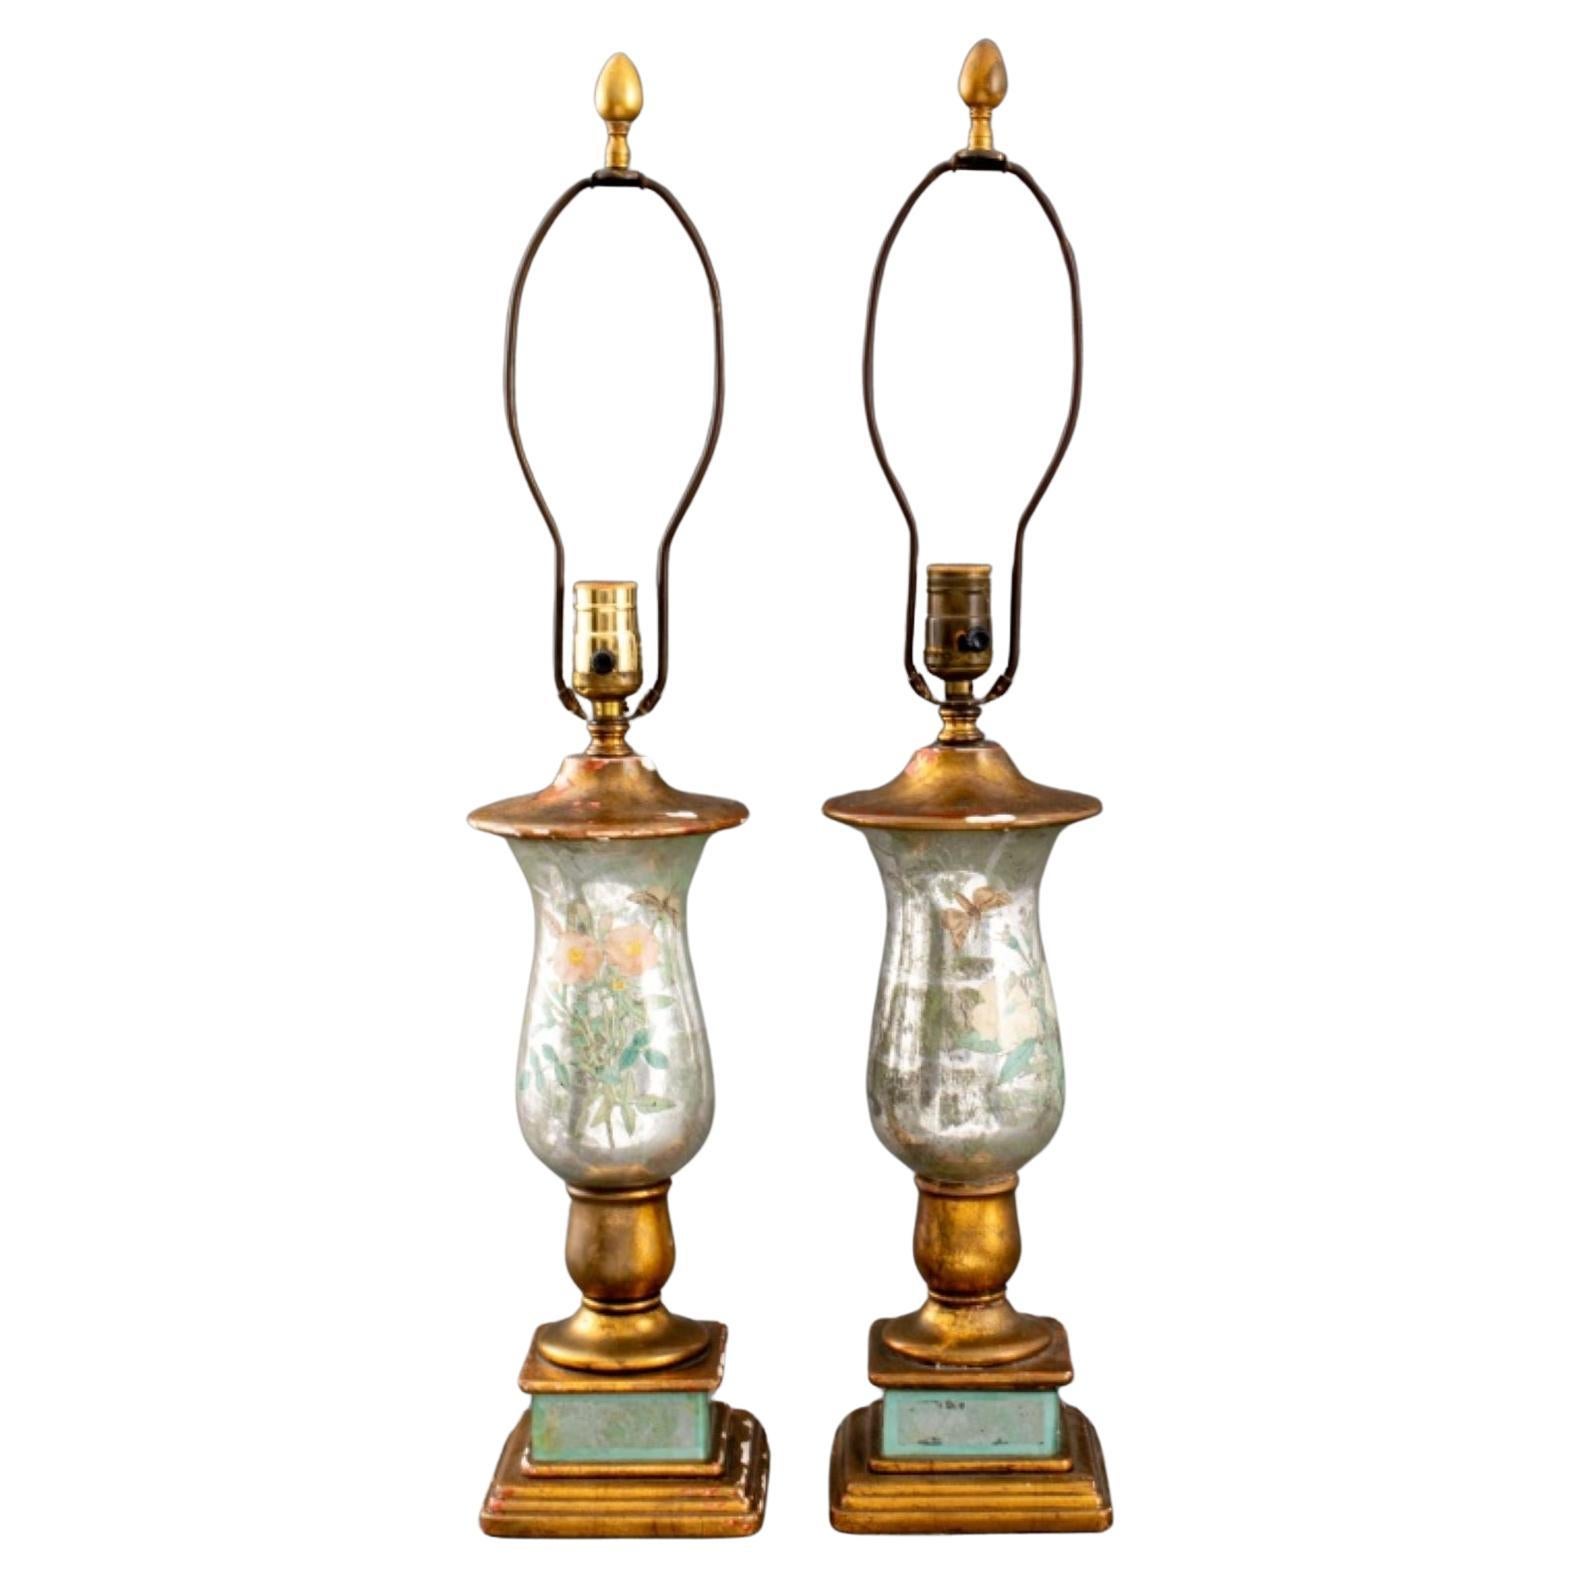 Pair of Mercury Glass Lamps, 20th C